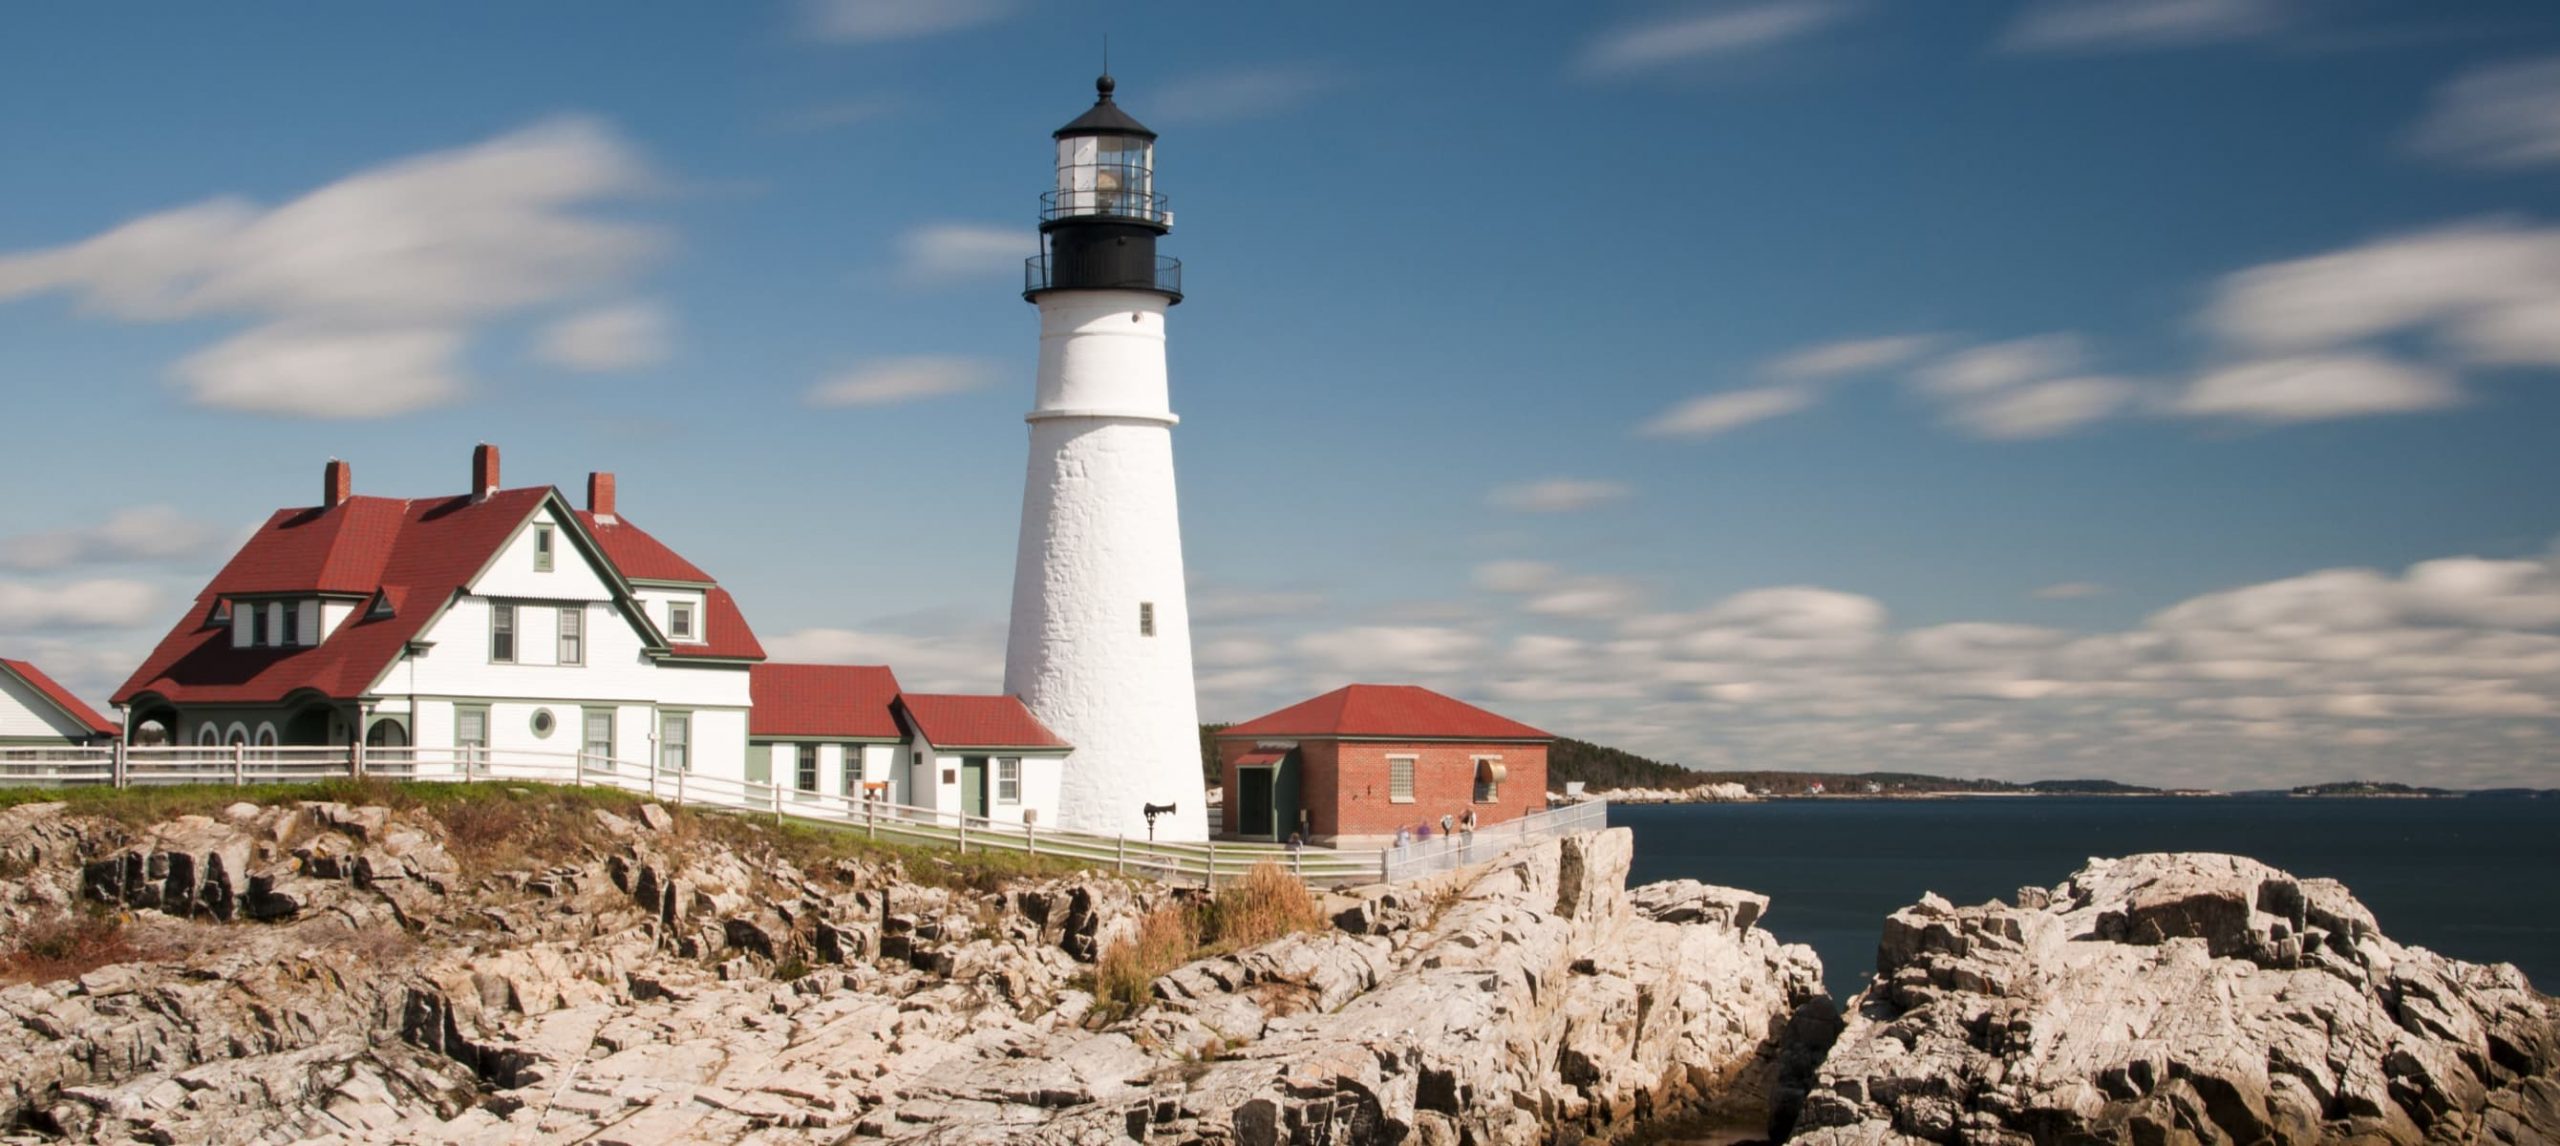 Portland Head Light Lighthouse in Maine, New England, USA.